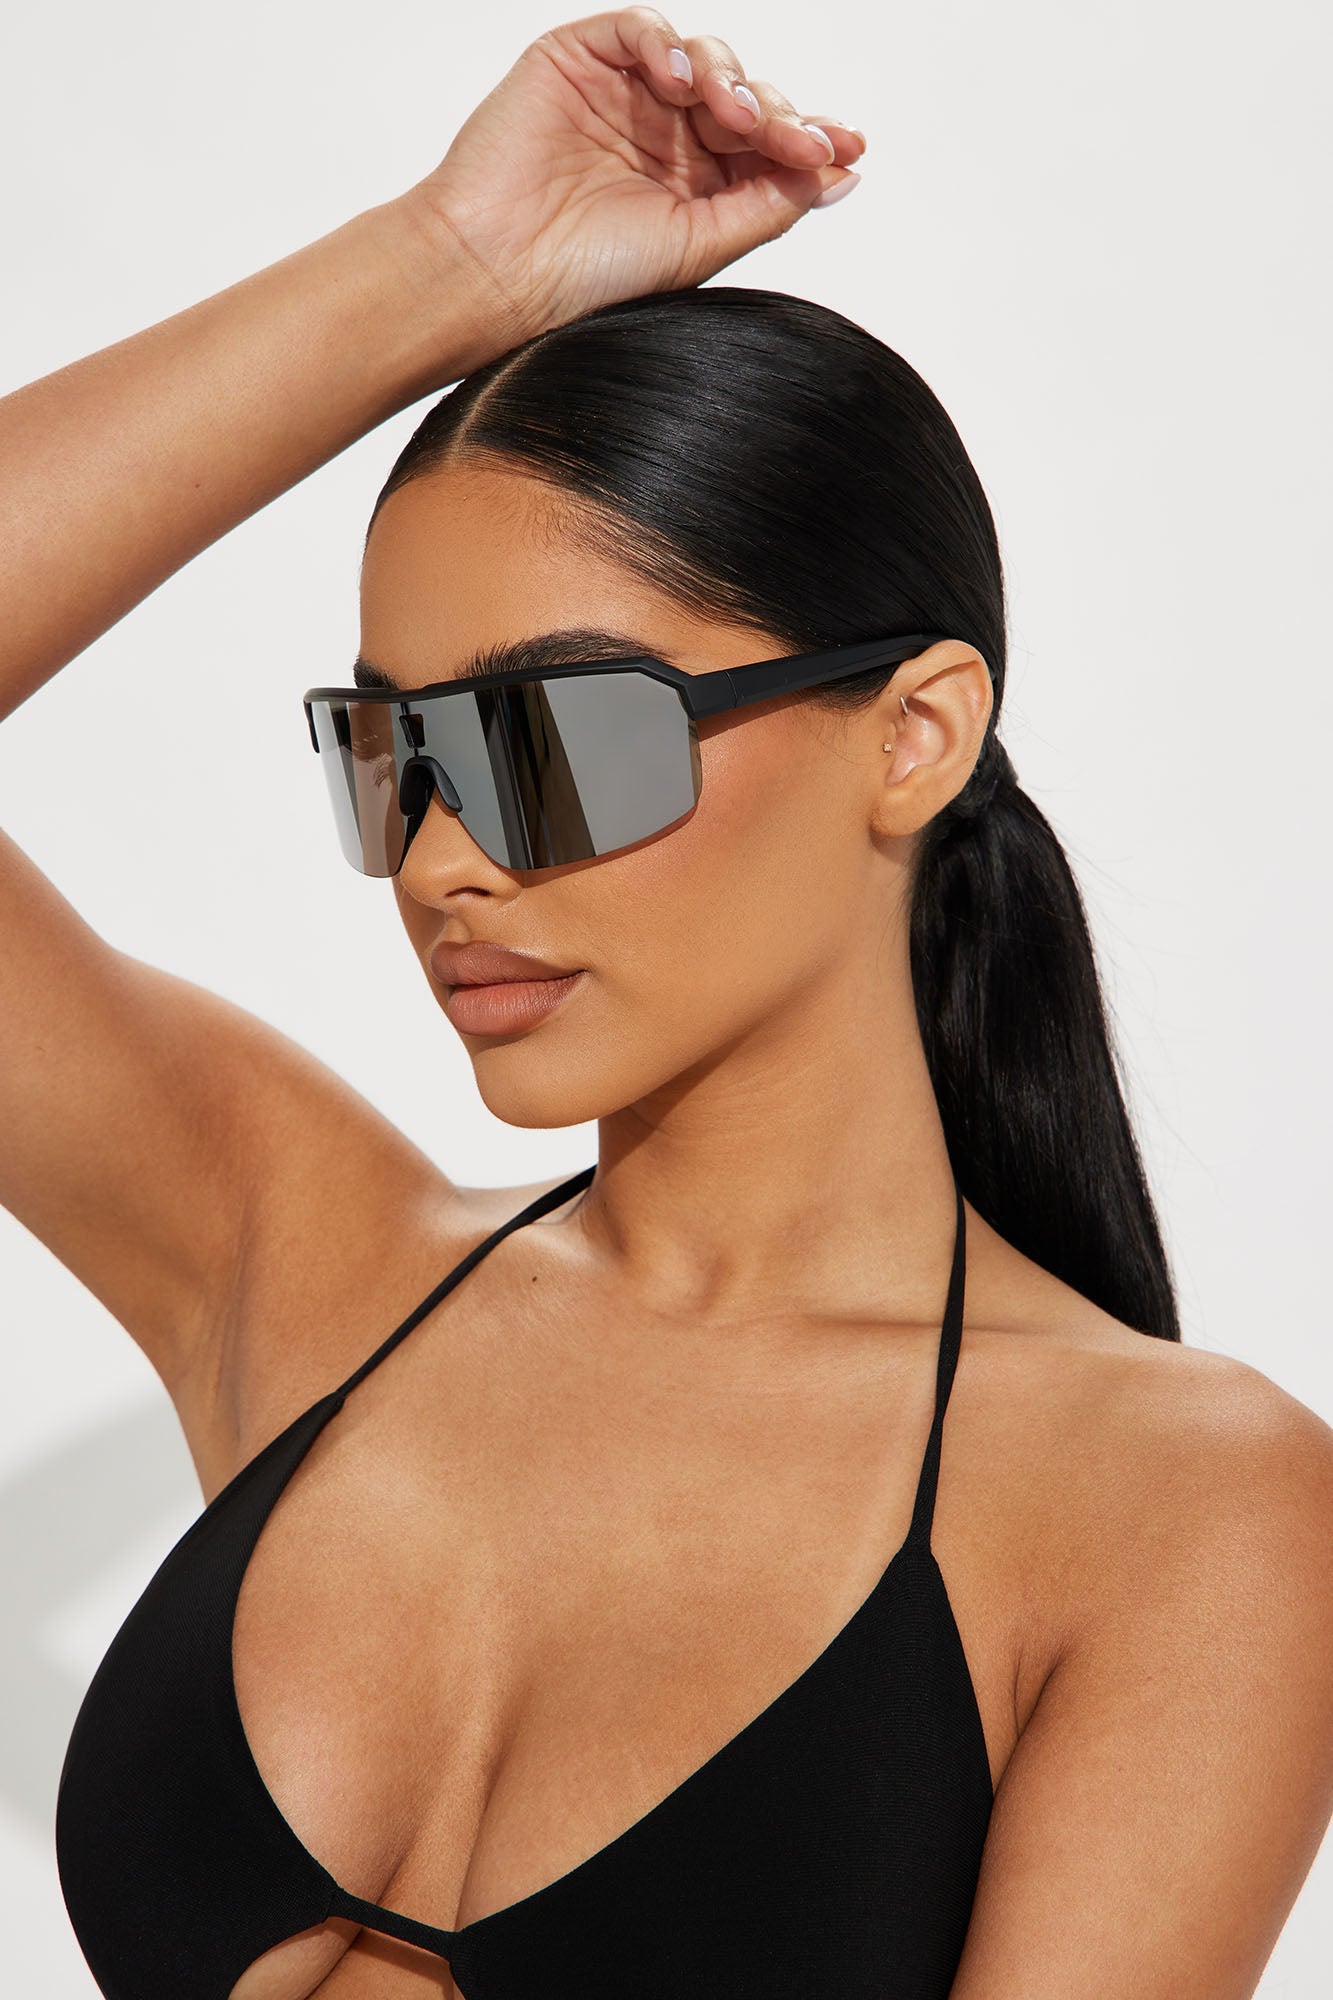 Women's Motor Sport Sunglasses in Black/Silver by Fashion Nova | Fashion Nova